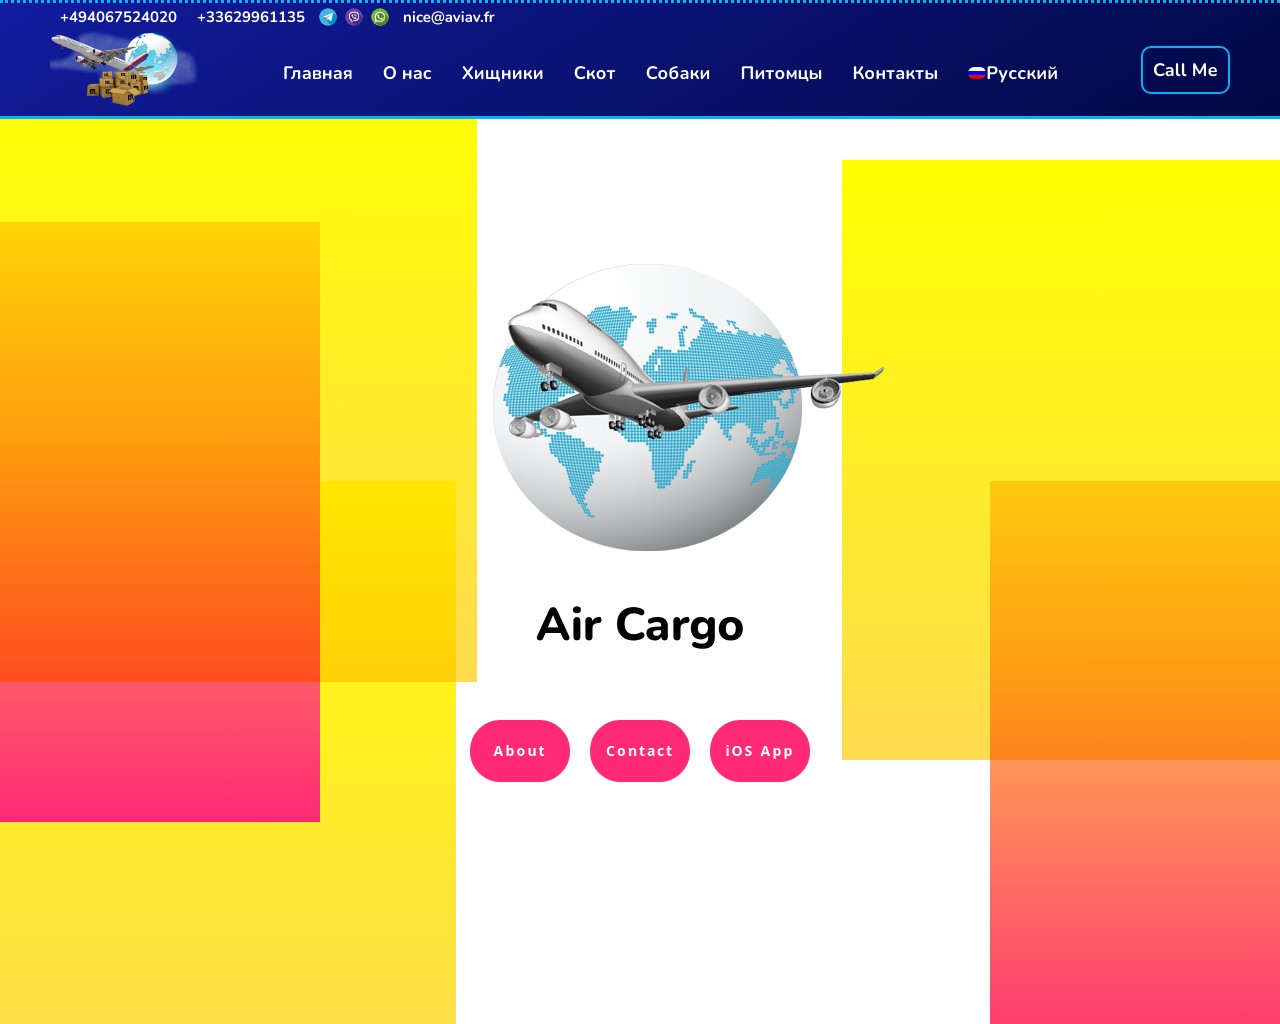 Изображение скриншота сайта - Авиаперевозки грузов от Cofrance SARL